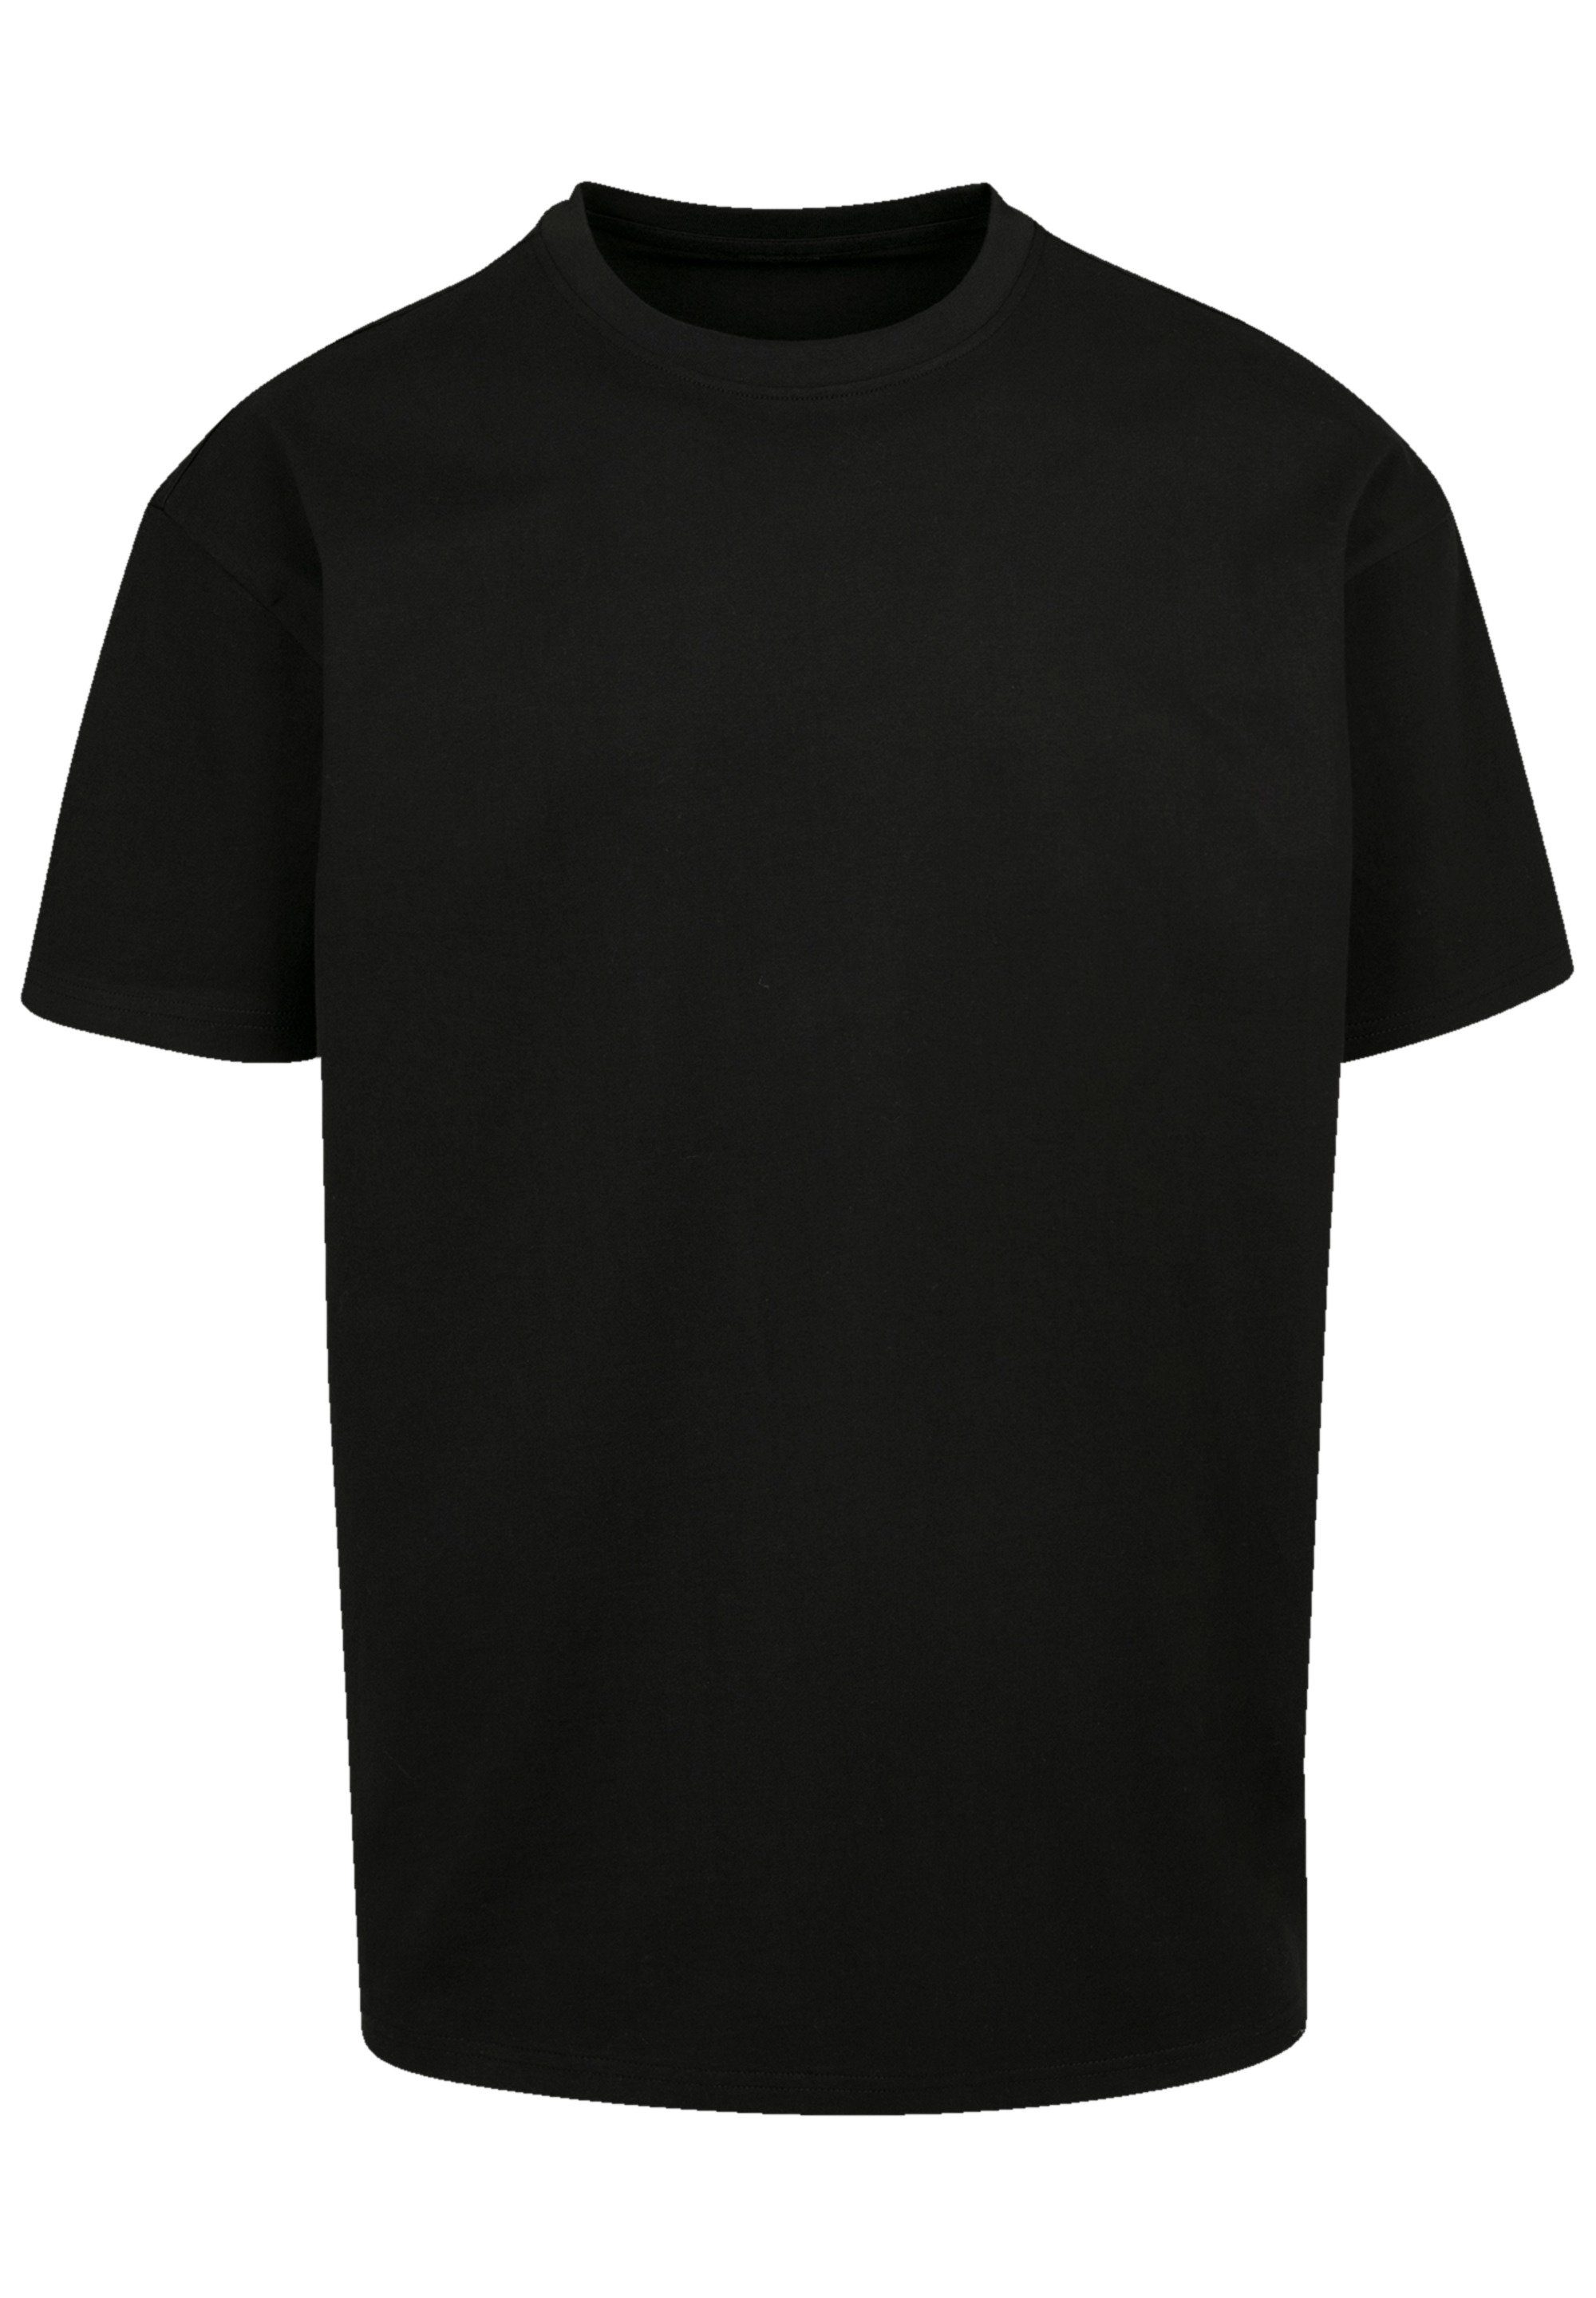 Kanagawa F4NT4STIC schwarz T-Shirt Print Welle